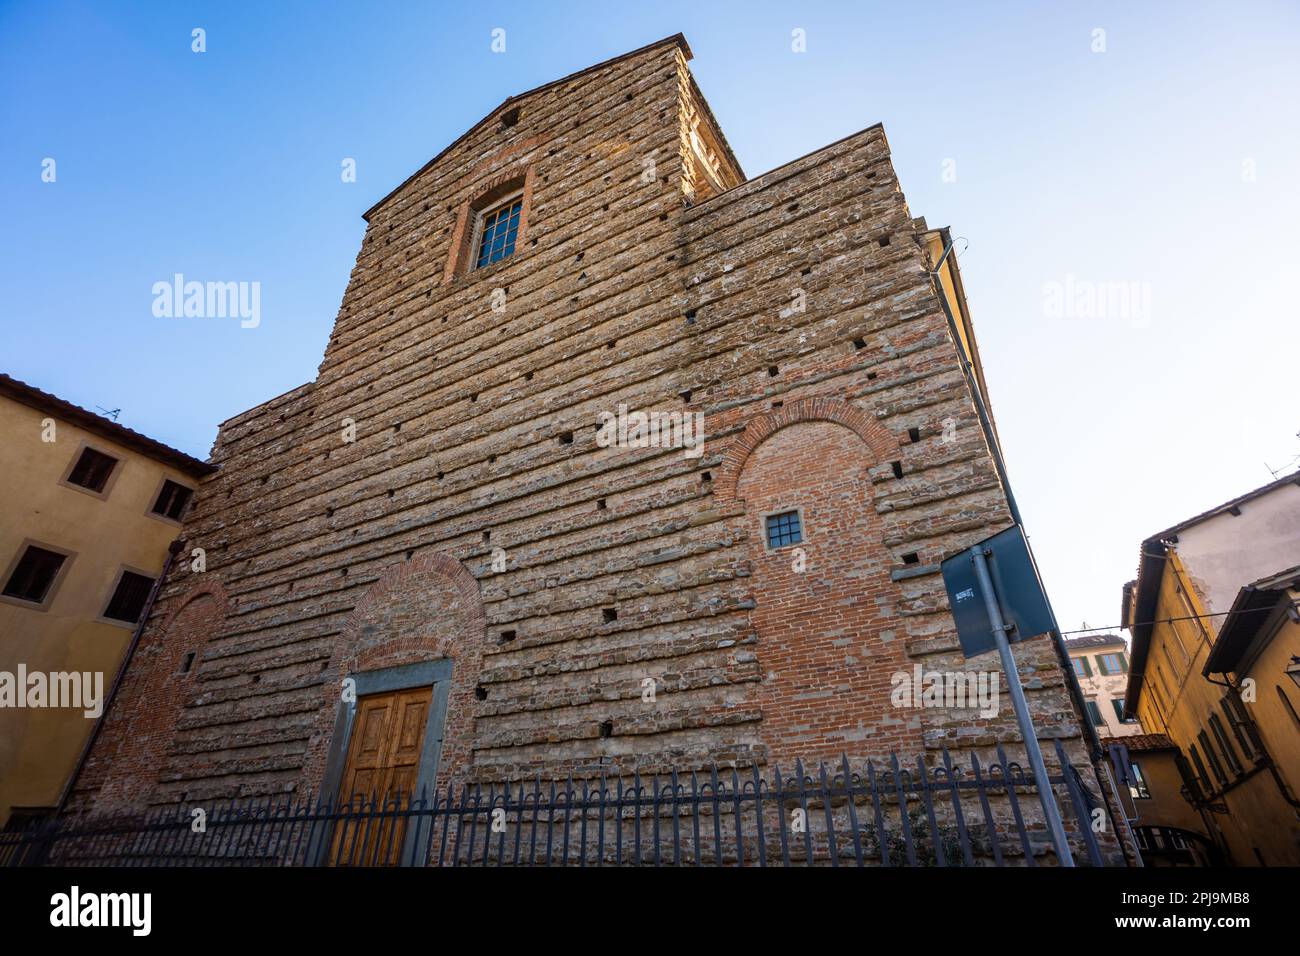 San frediano in castello chucrh in the Oltrarno, Florence Stock Photo